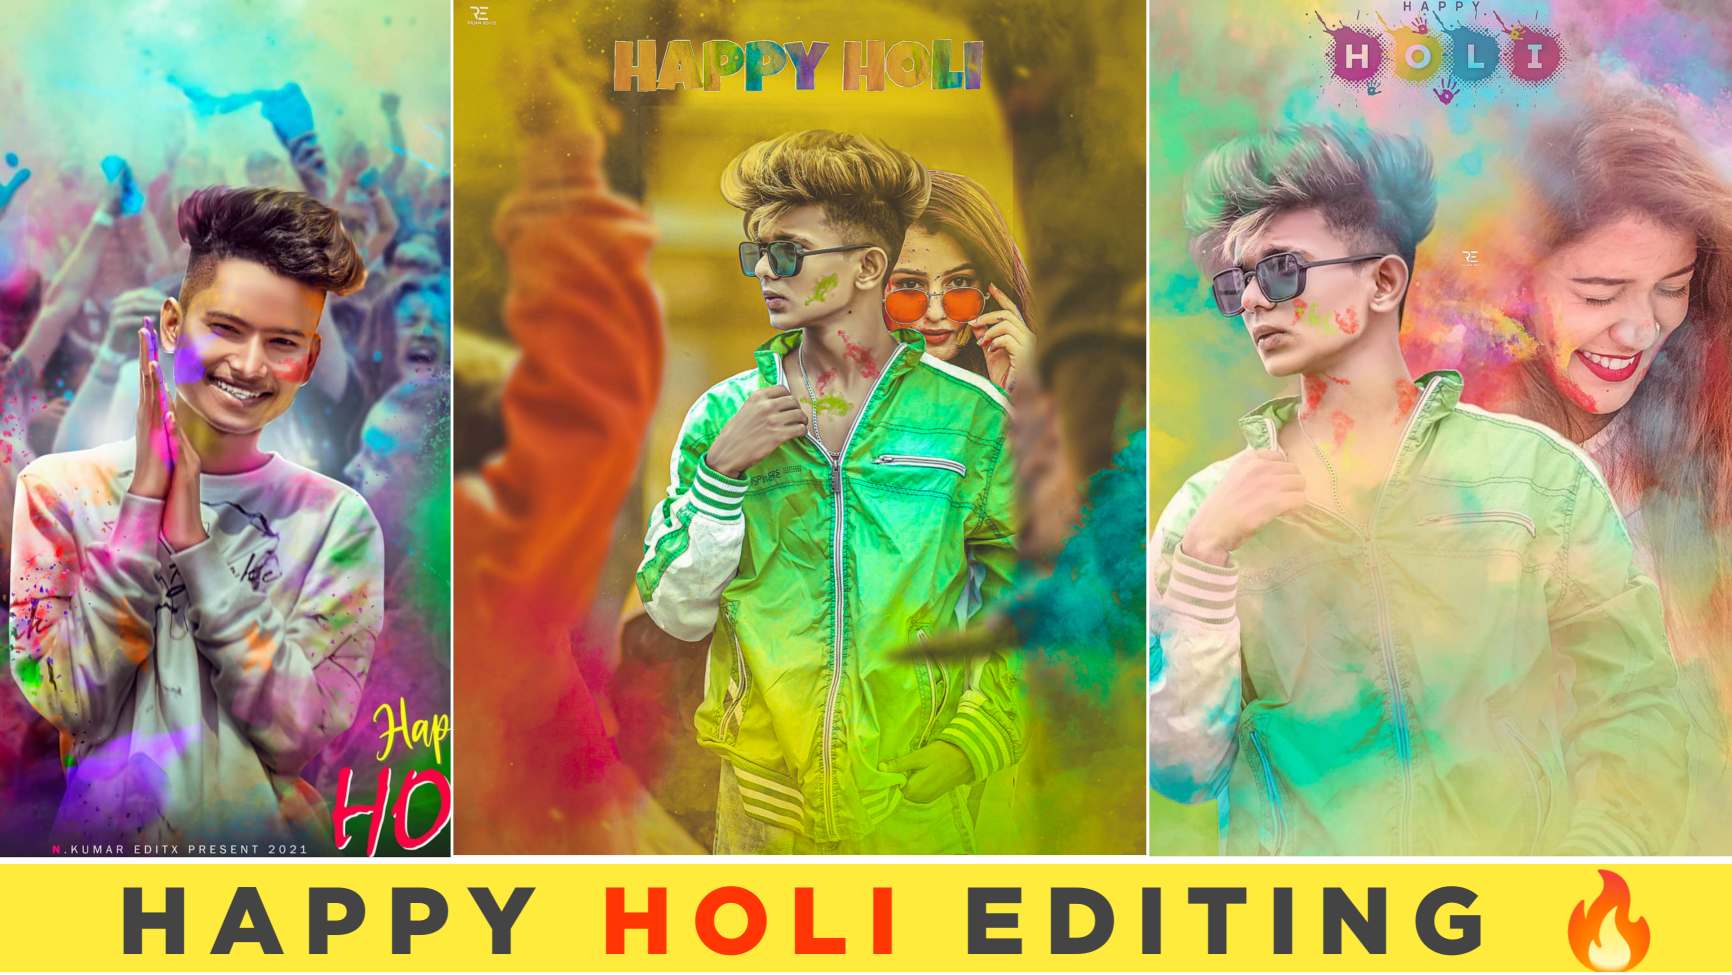 Happy holi editing background | Holi editing background download ...